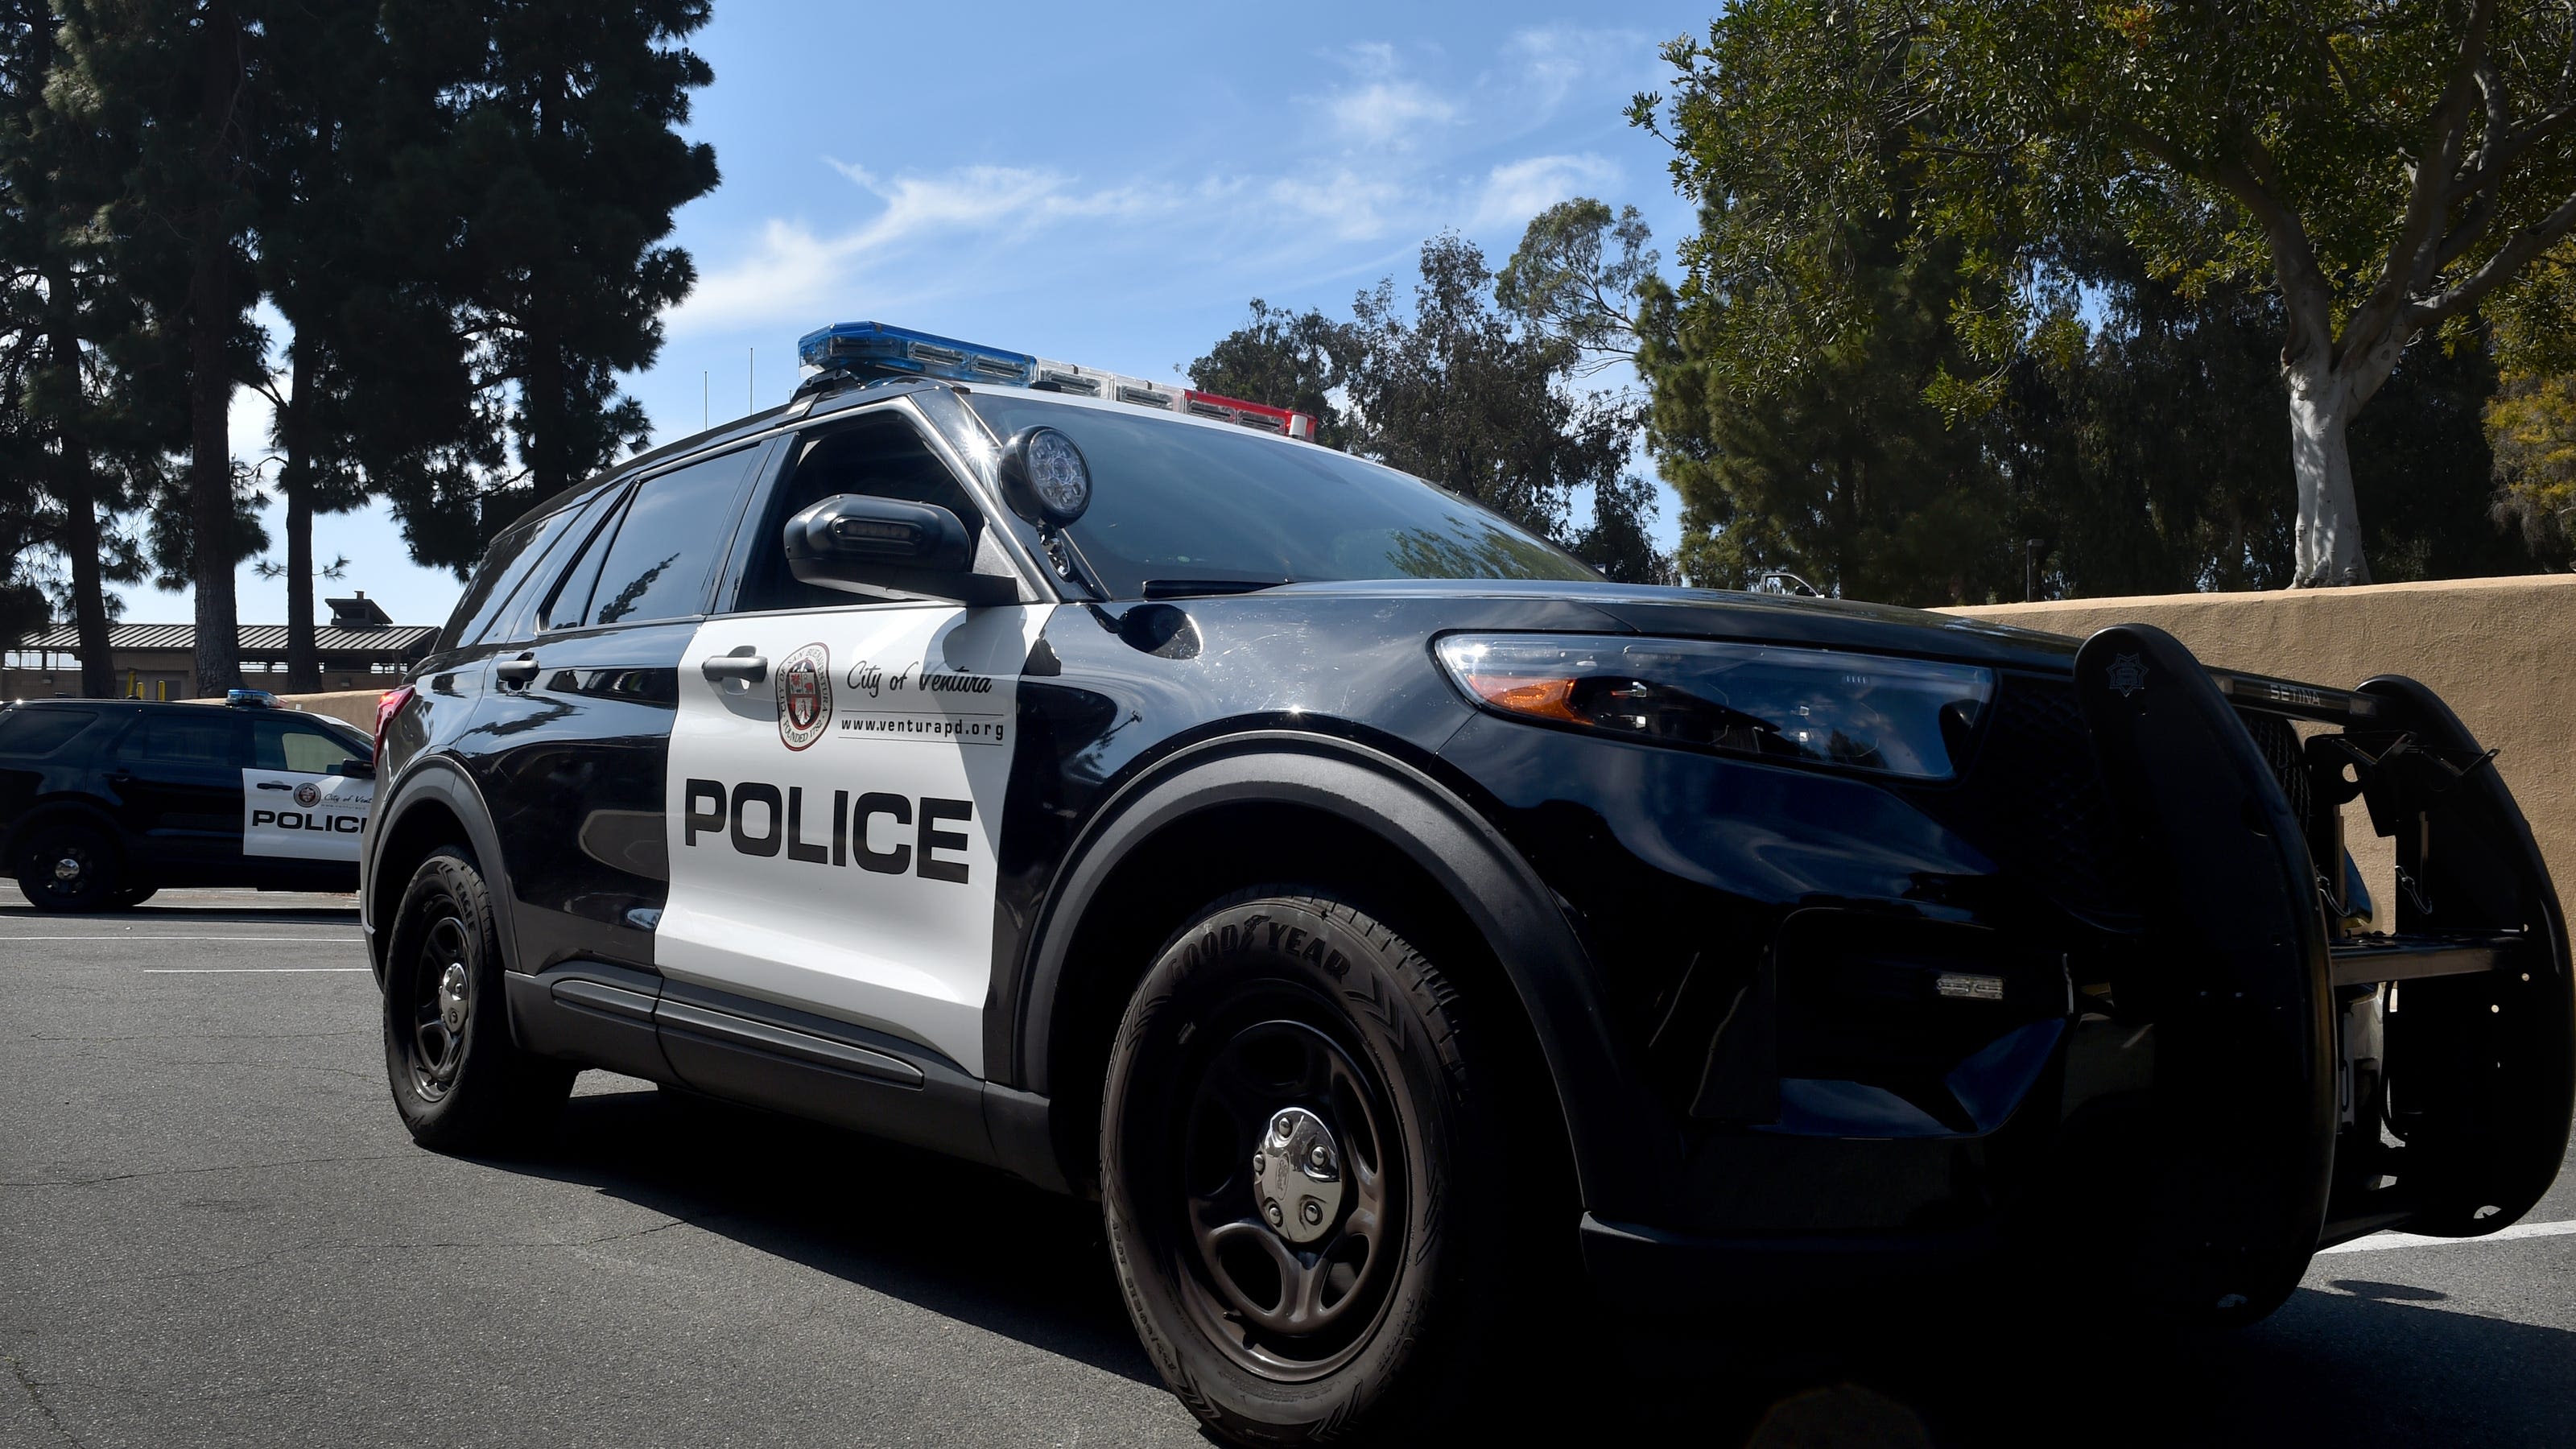 Ventura police solve 1991 murder case using new technology